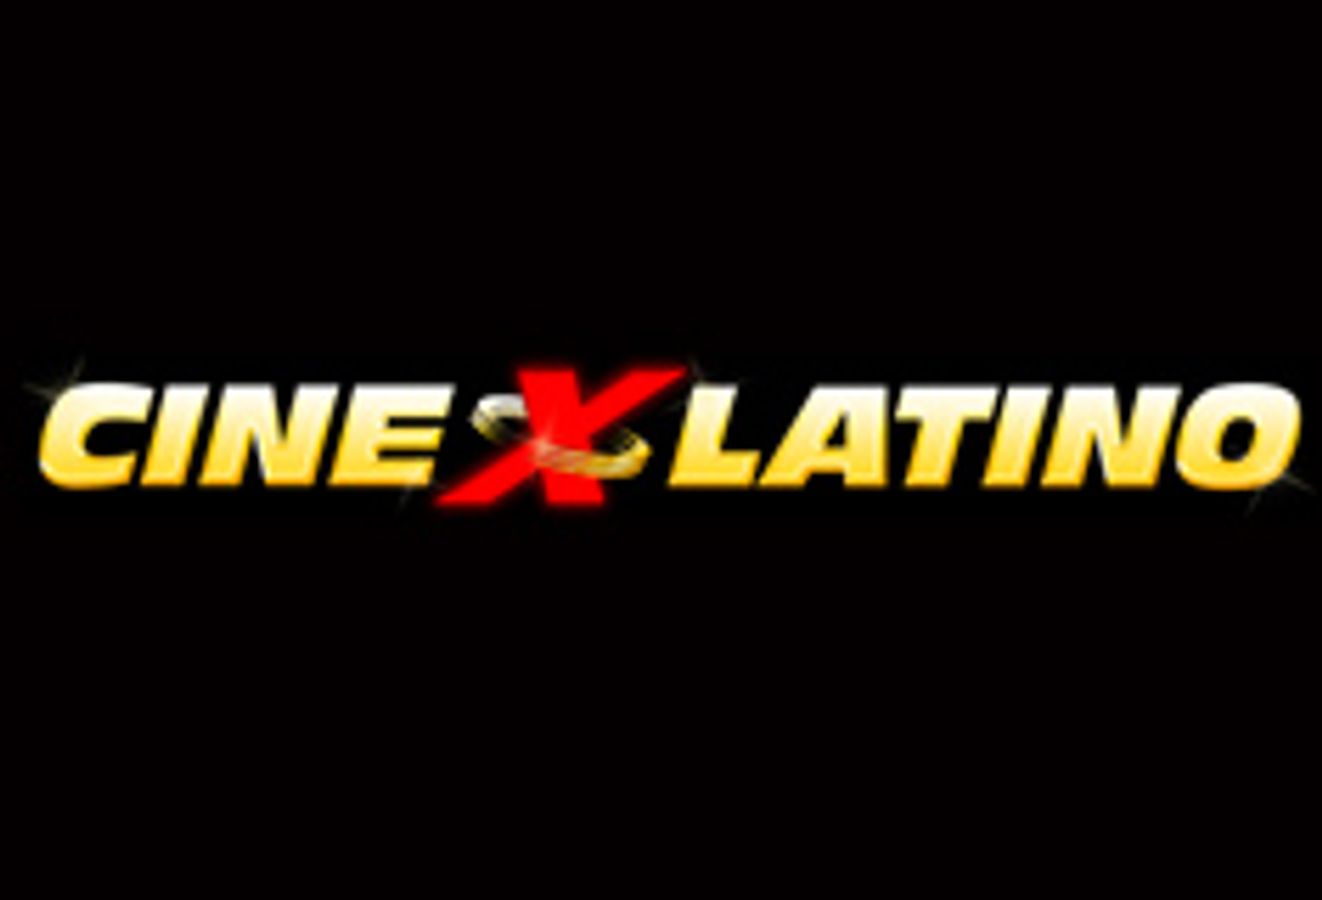 Cine X Latino